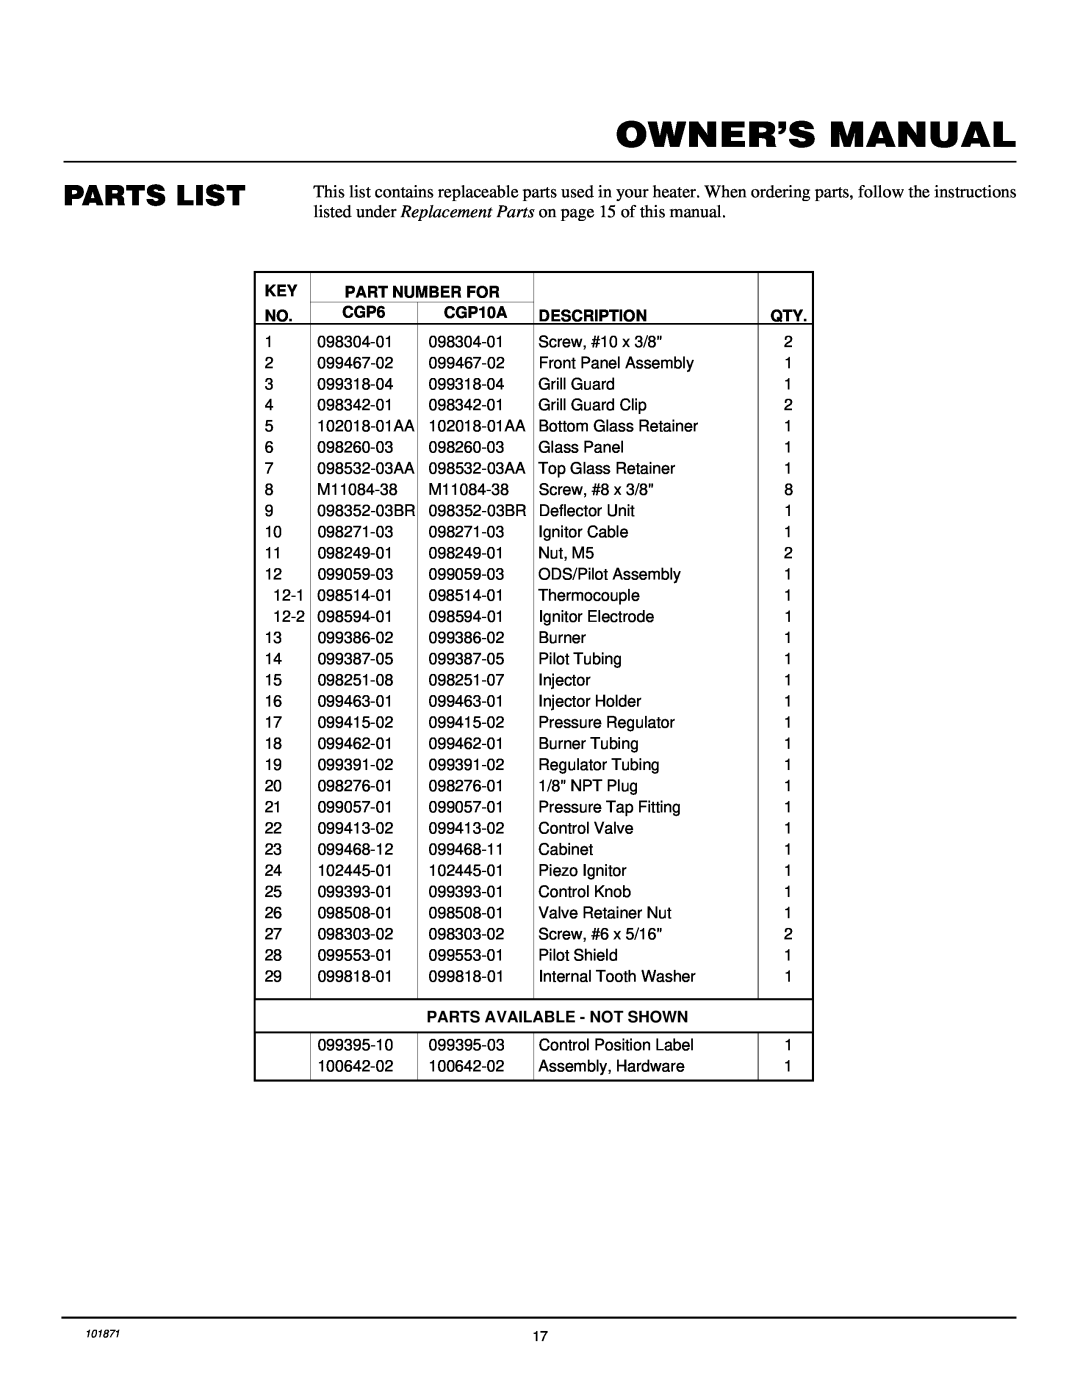 Desa CGP10A installation manual Parts List, Part Number For, CGP6, Description, Parts Available - Not Shown 